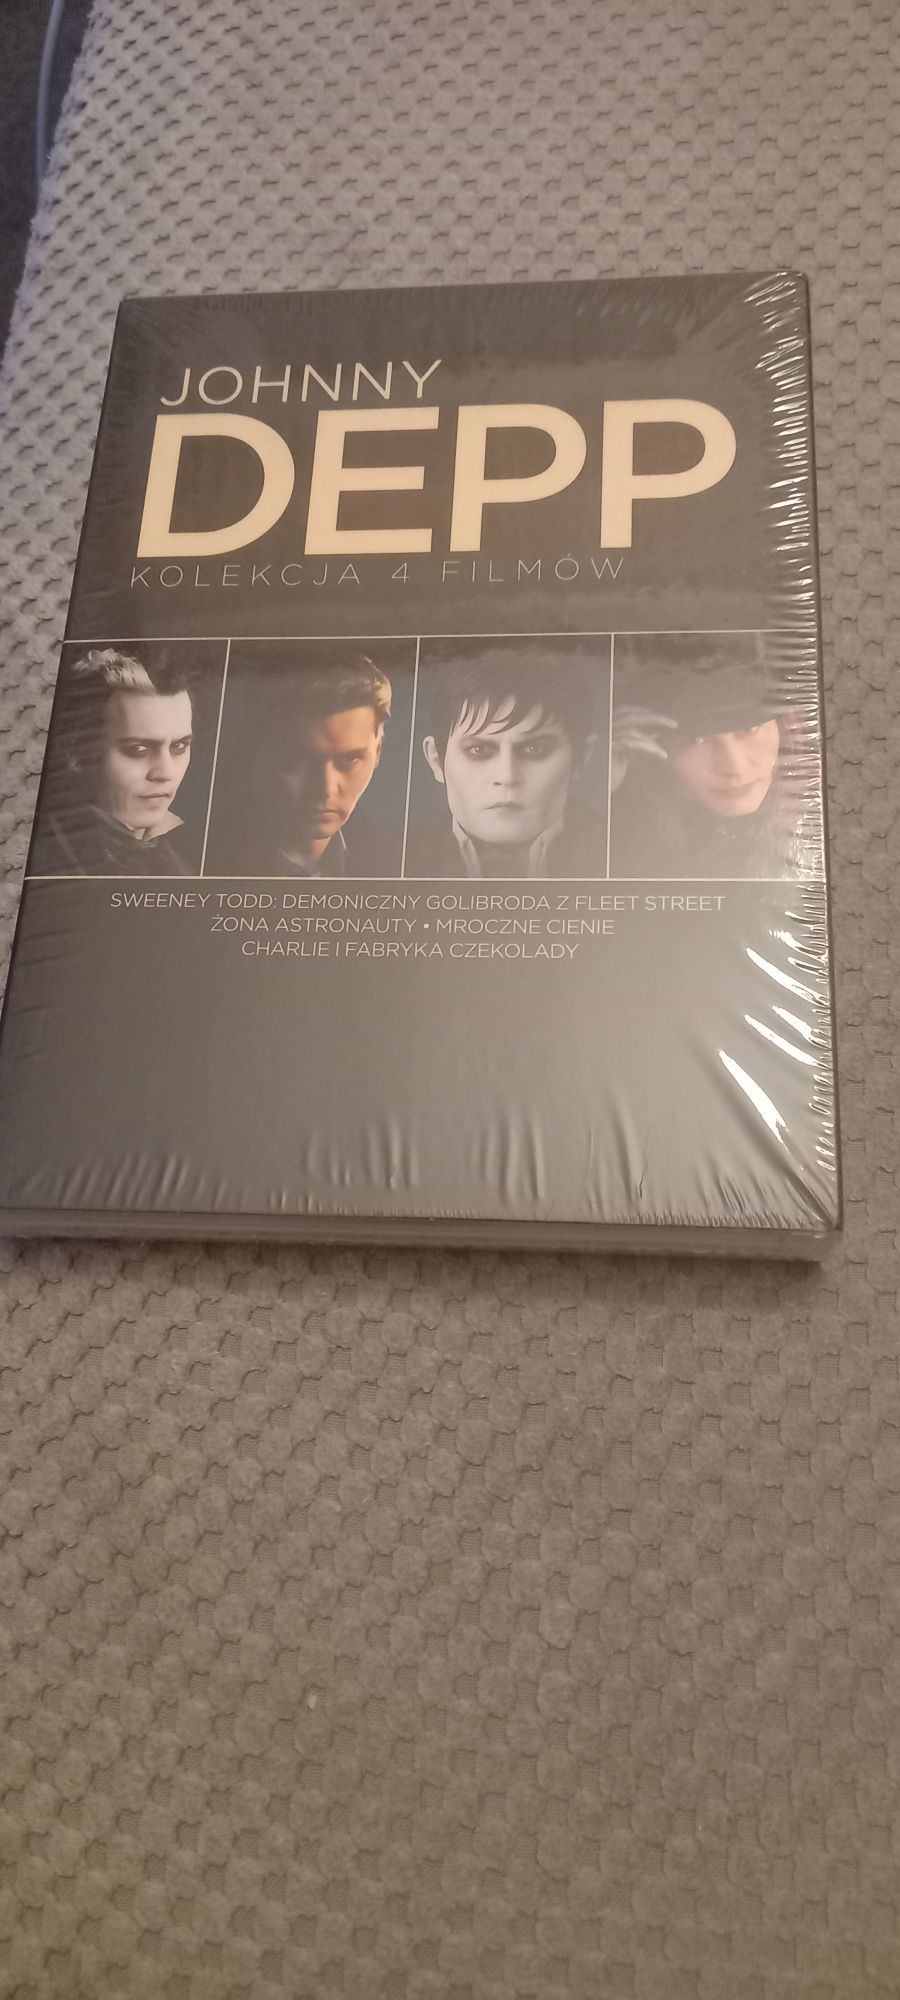 Johnny Depp kolekcja 4 dvd